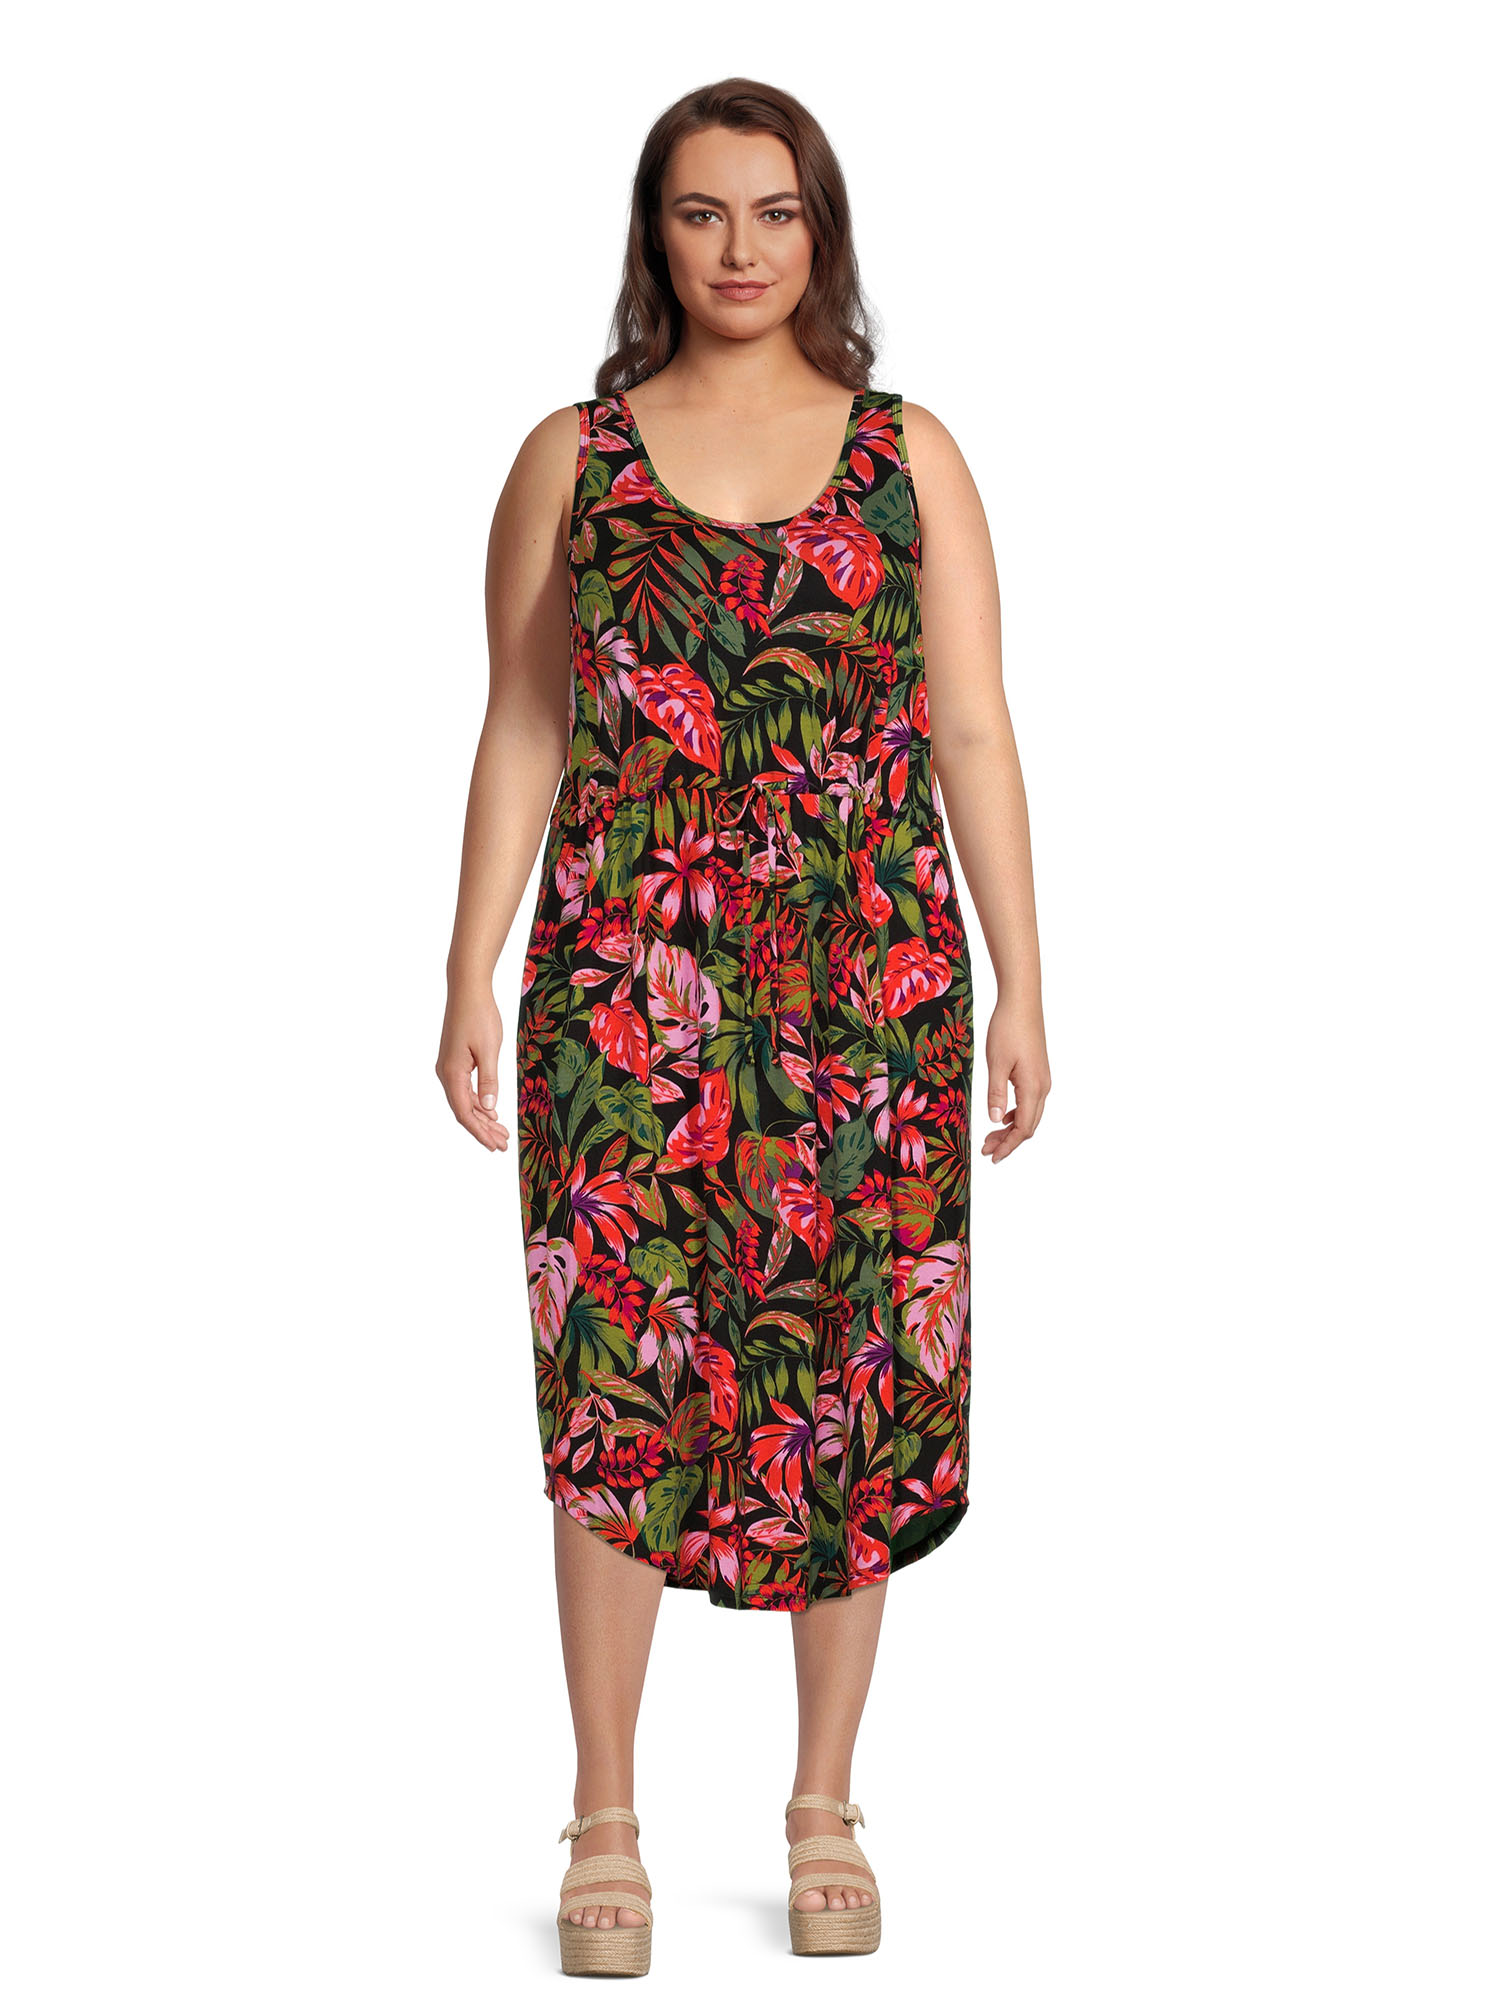 Terra & Sky Women's Plus Size Drawstring Waist Tank Dress - image 1 of 5